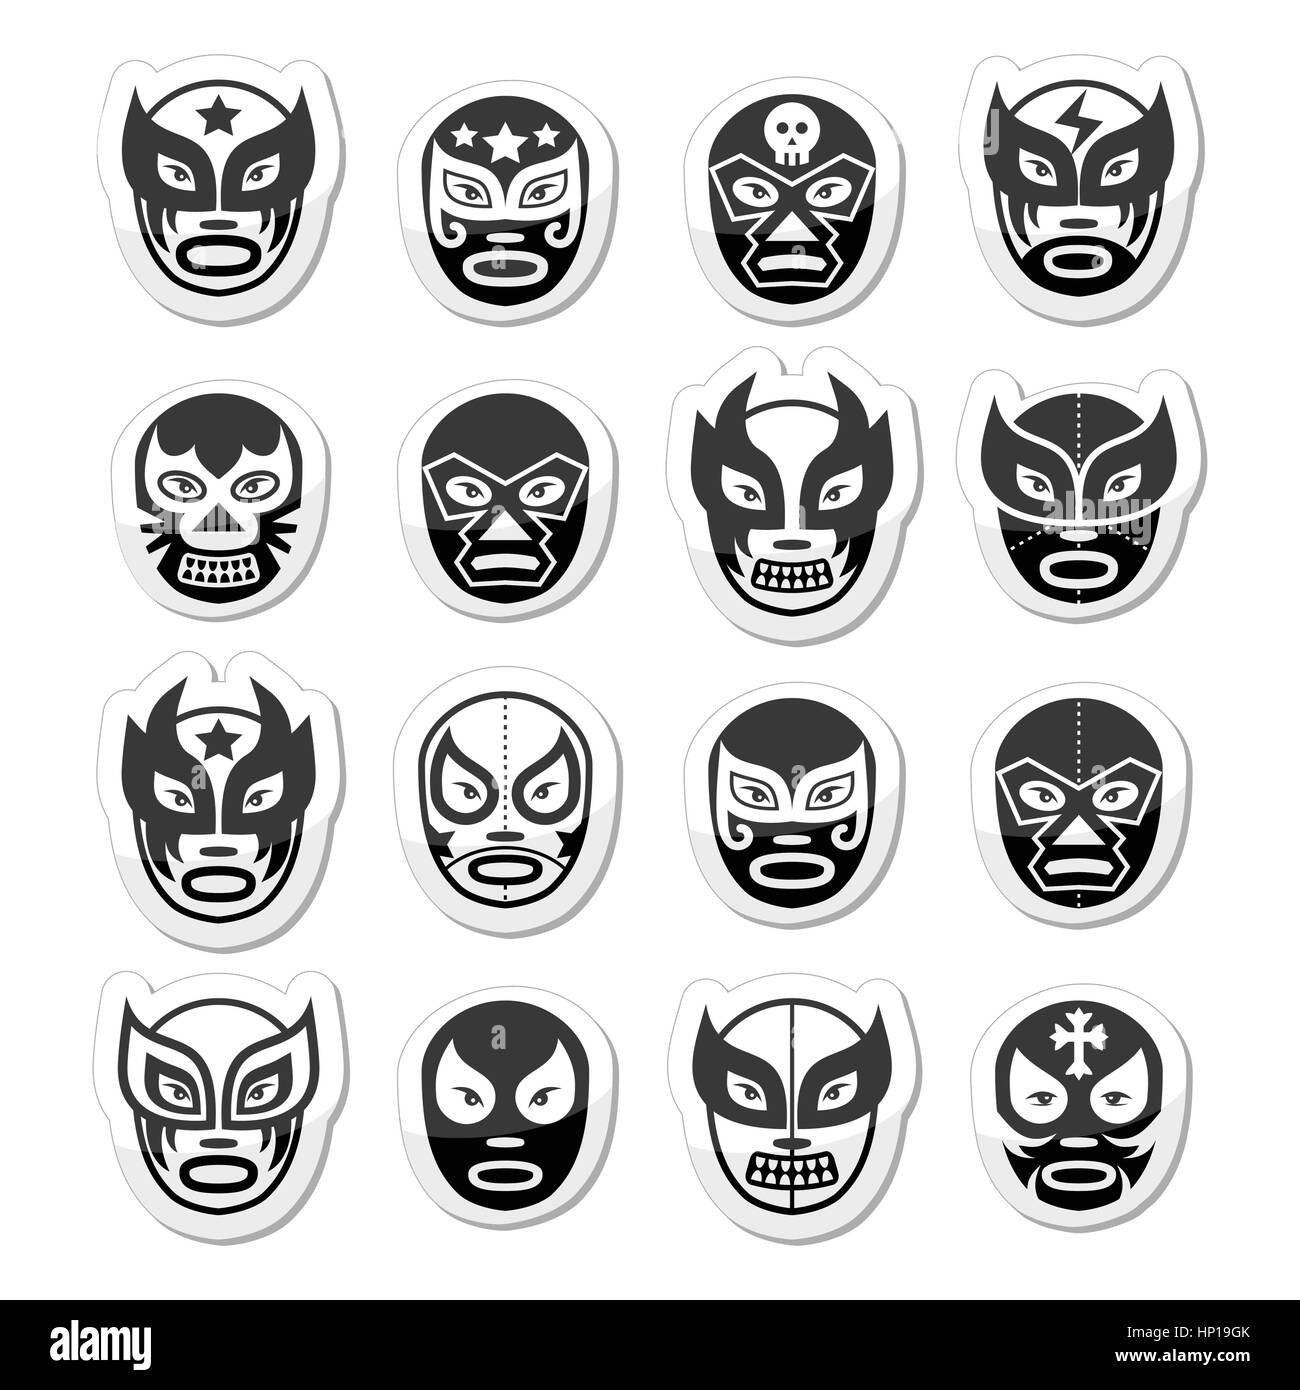 Lucha libre, luchador Mexican wrestling black masks icons Stock Vector